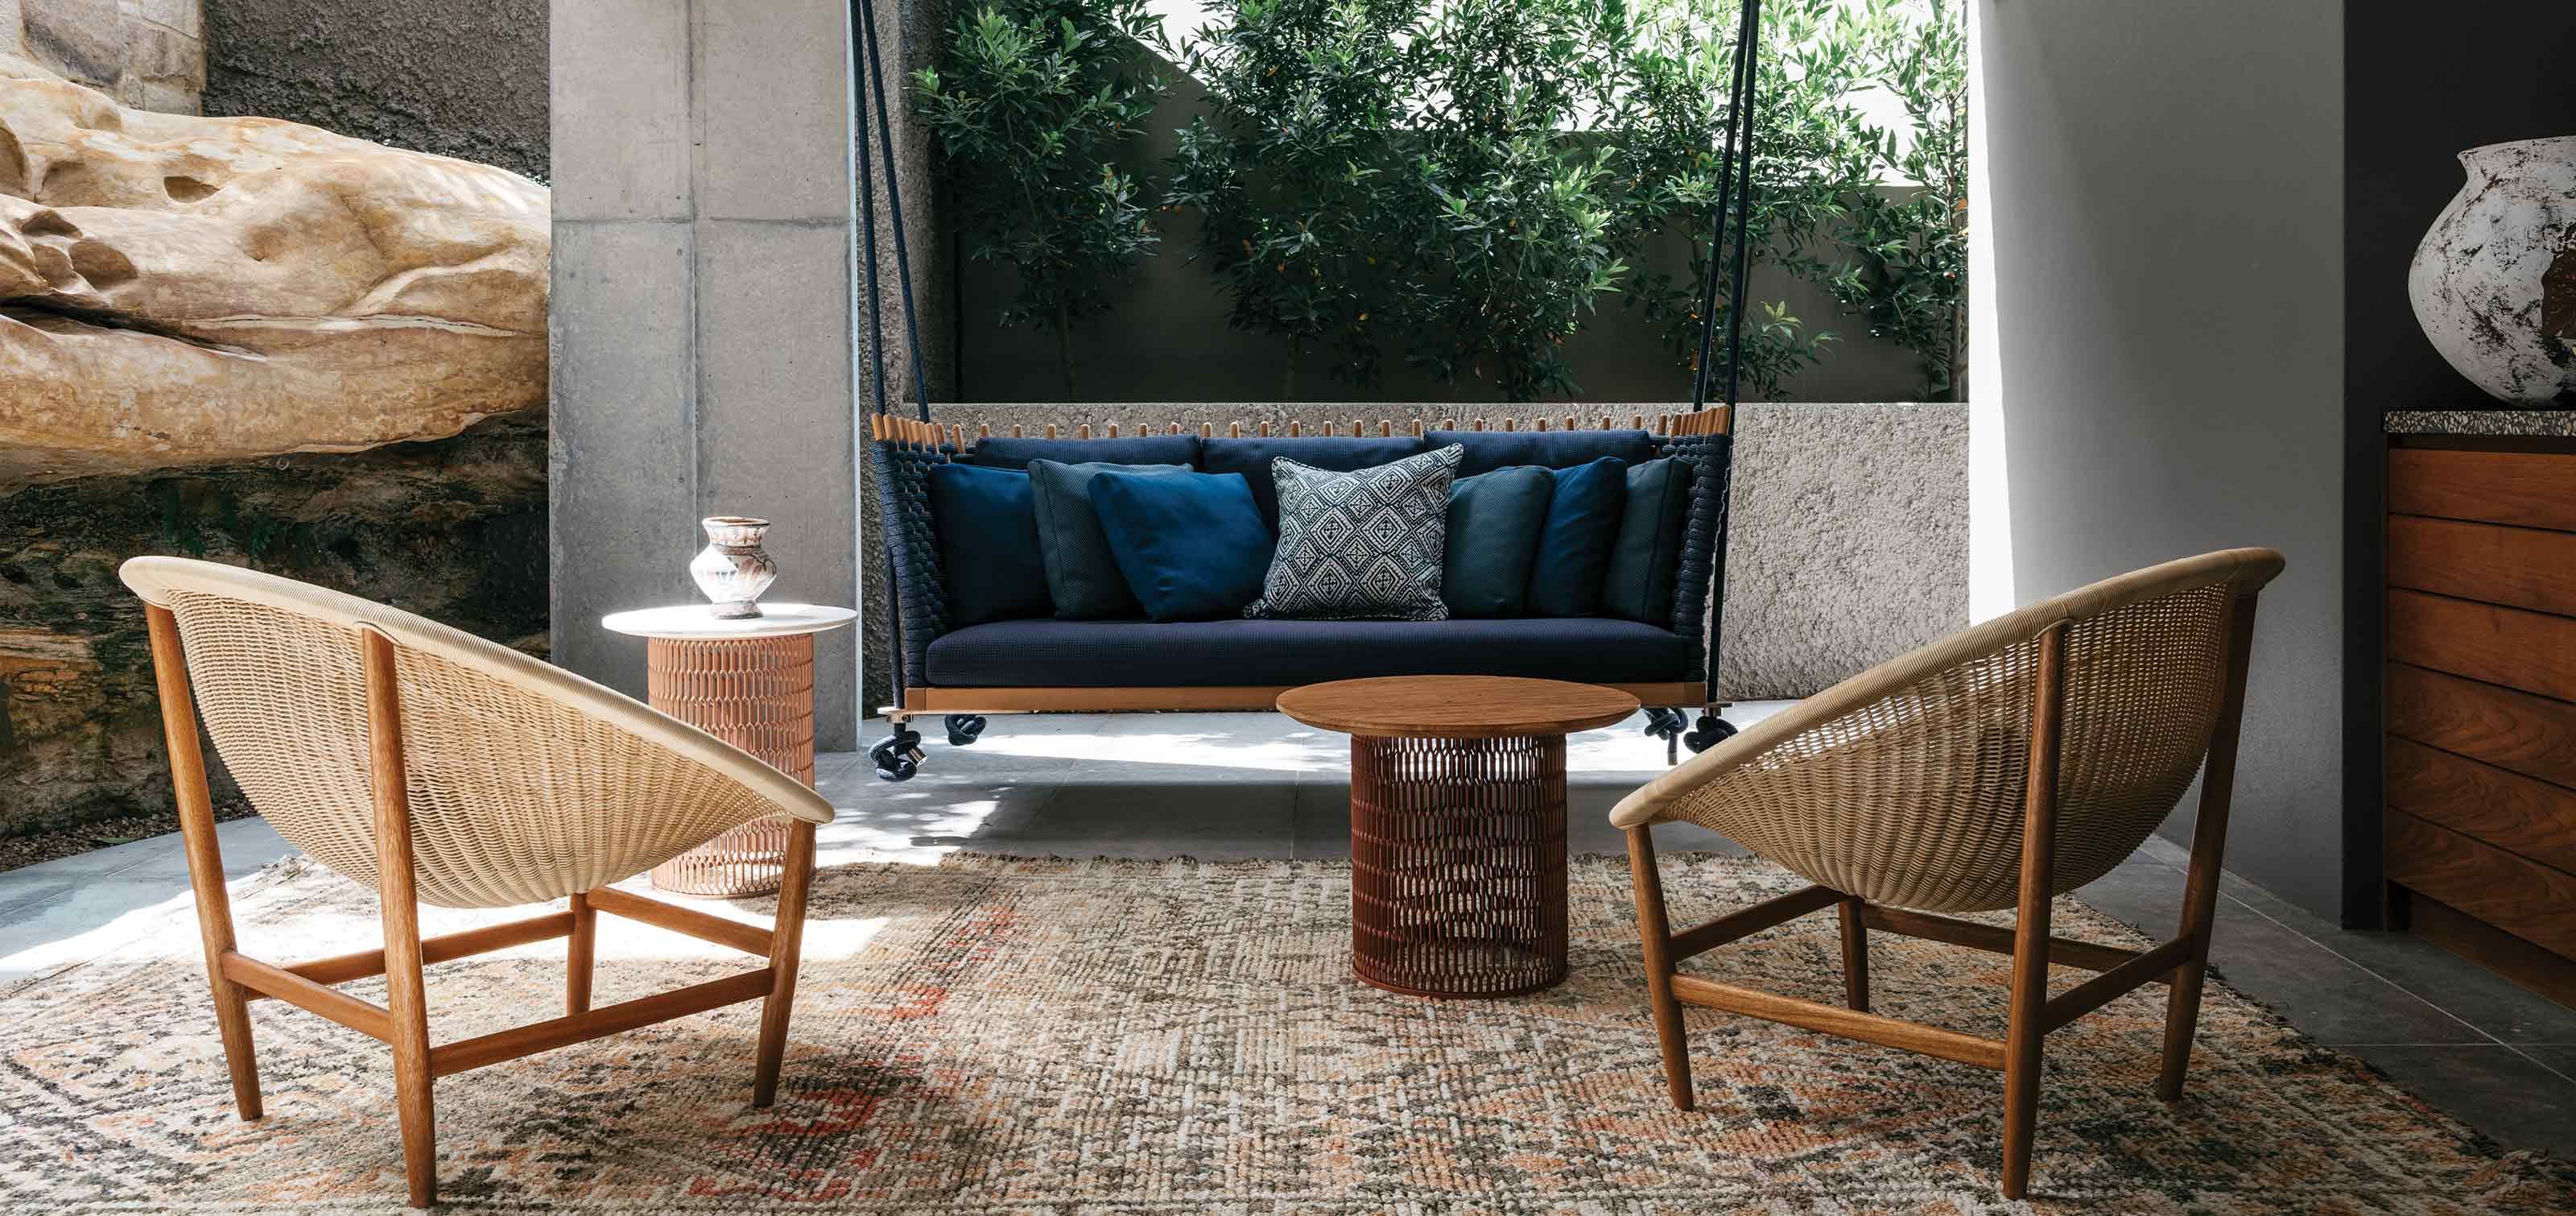 40 Best Patio Ideas For 2019 Stylish Outdoor Patio Design Ideas